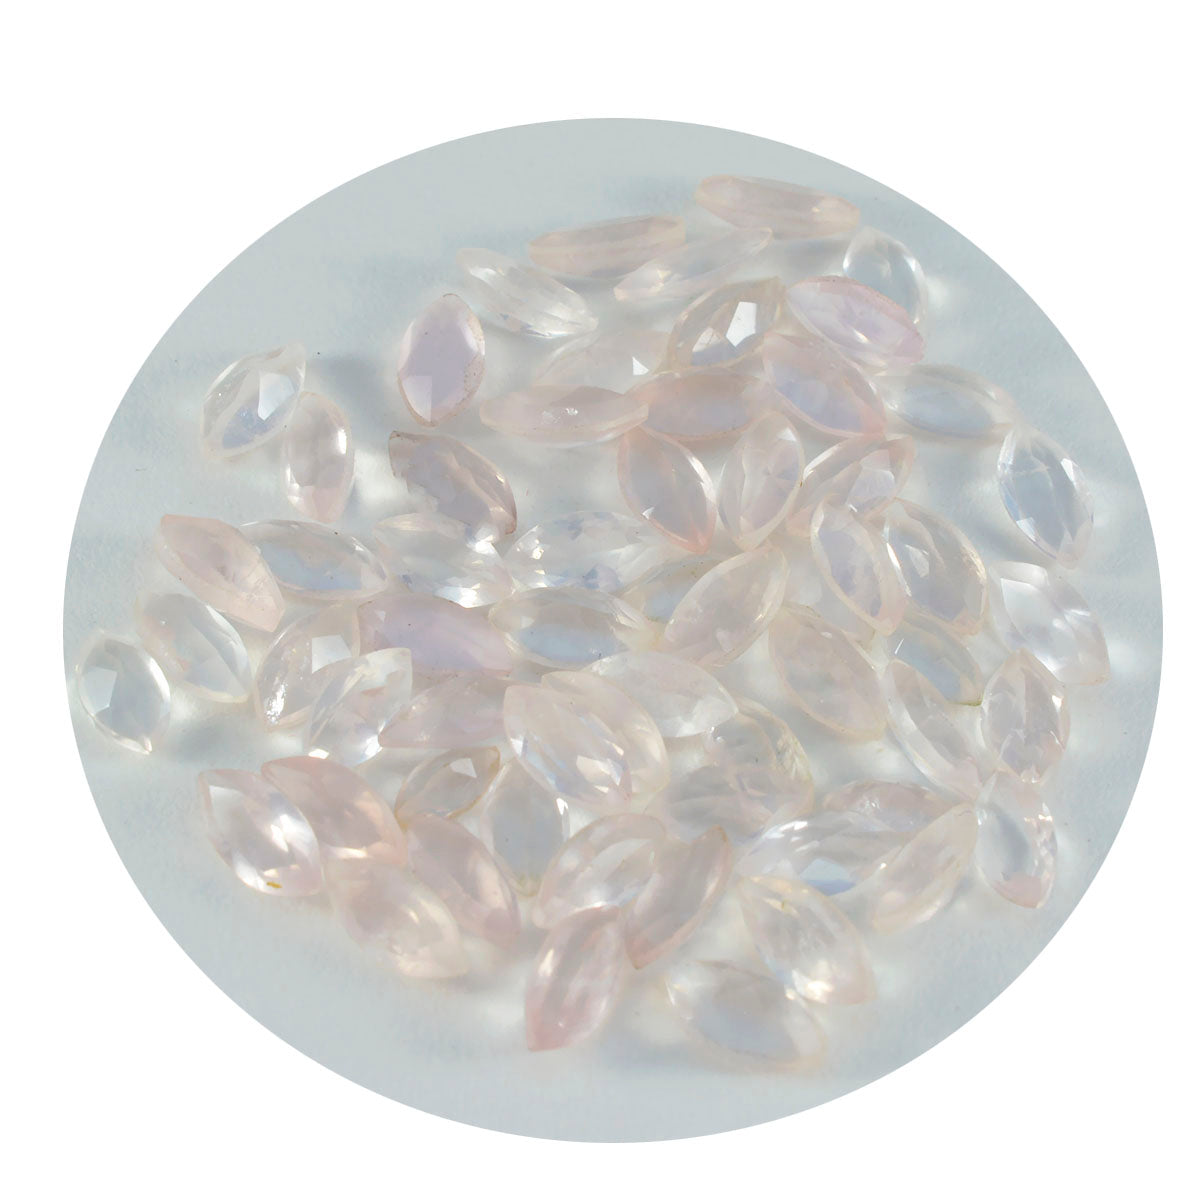 riyogems 1шт розовый кварц ограненный 3х6 мм форма маркиза А+1 качество свободный камень